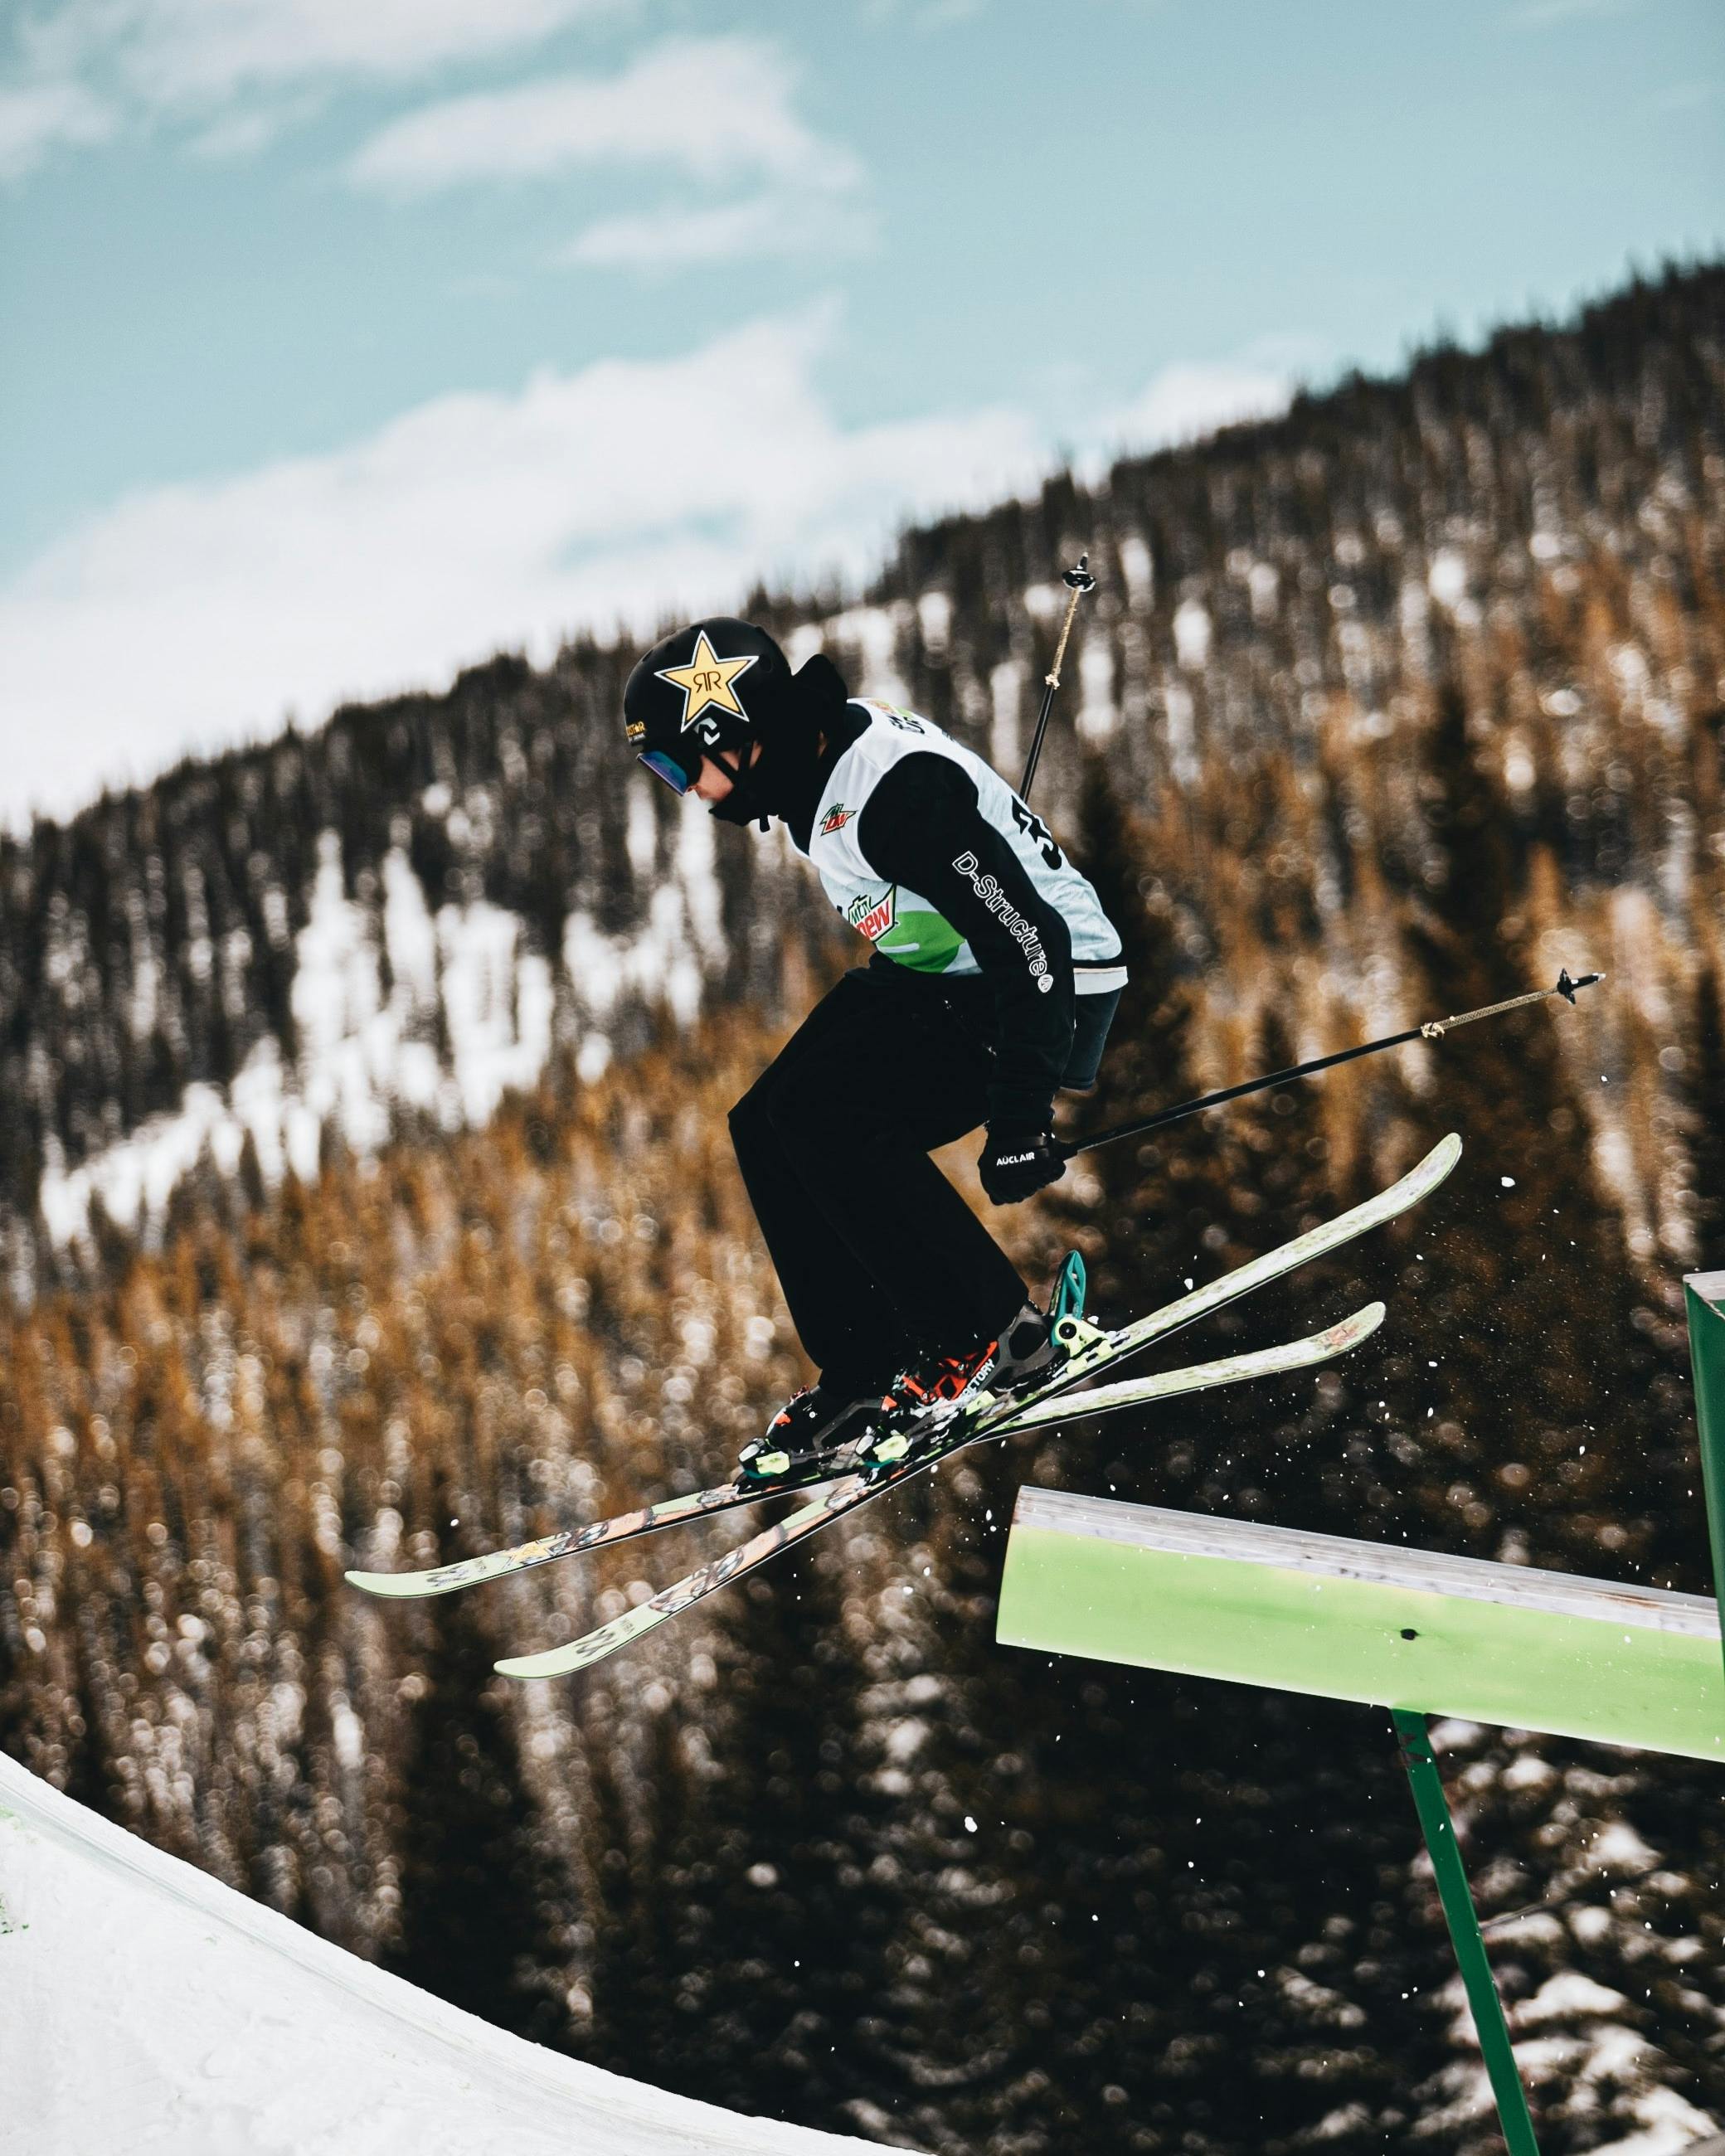 A skier in the terrain park executing a jump